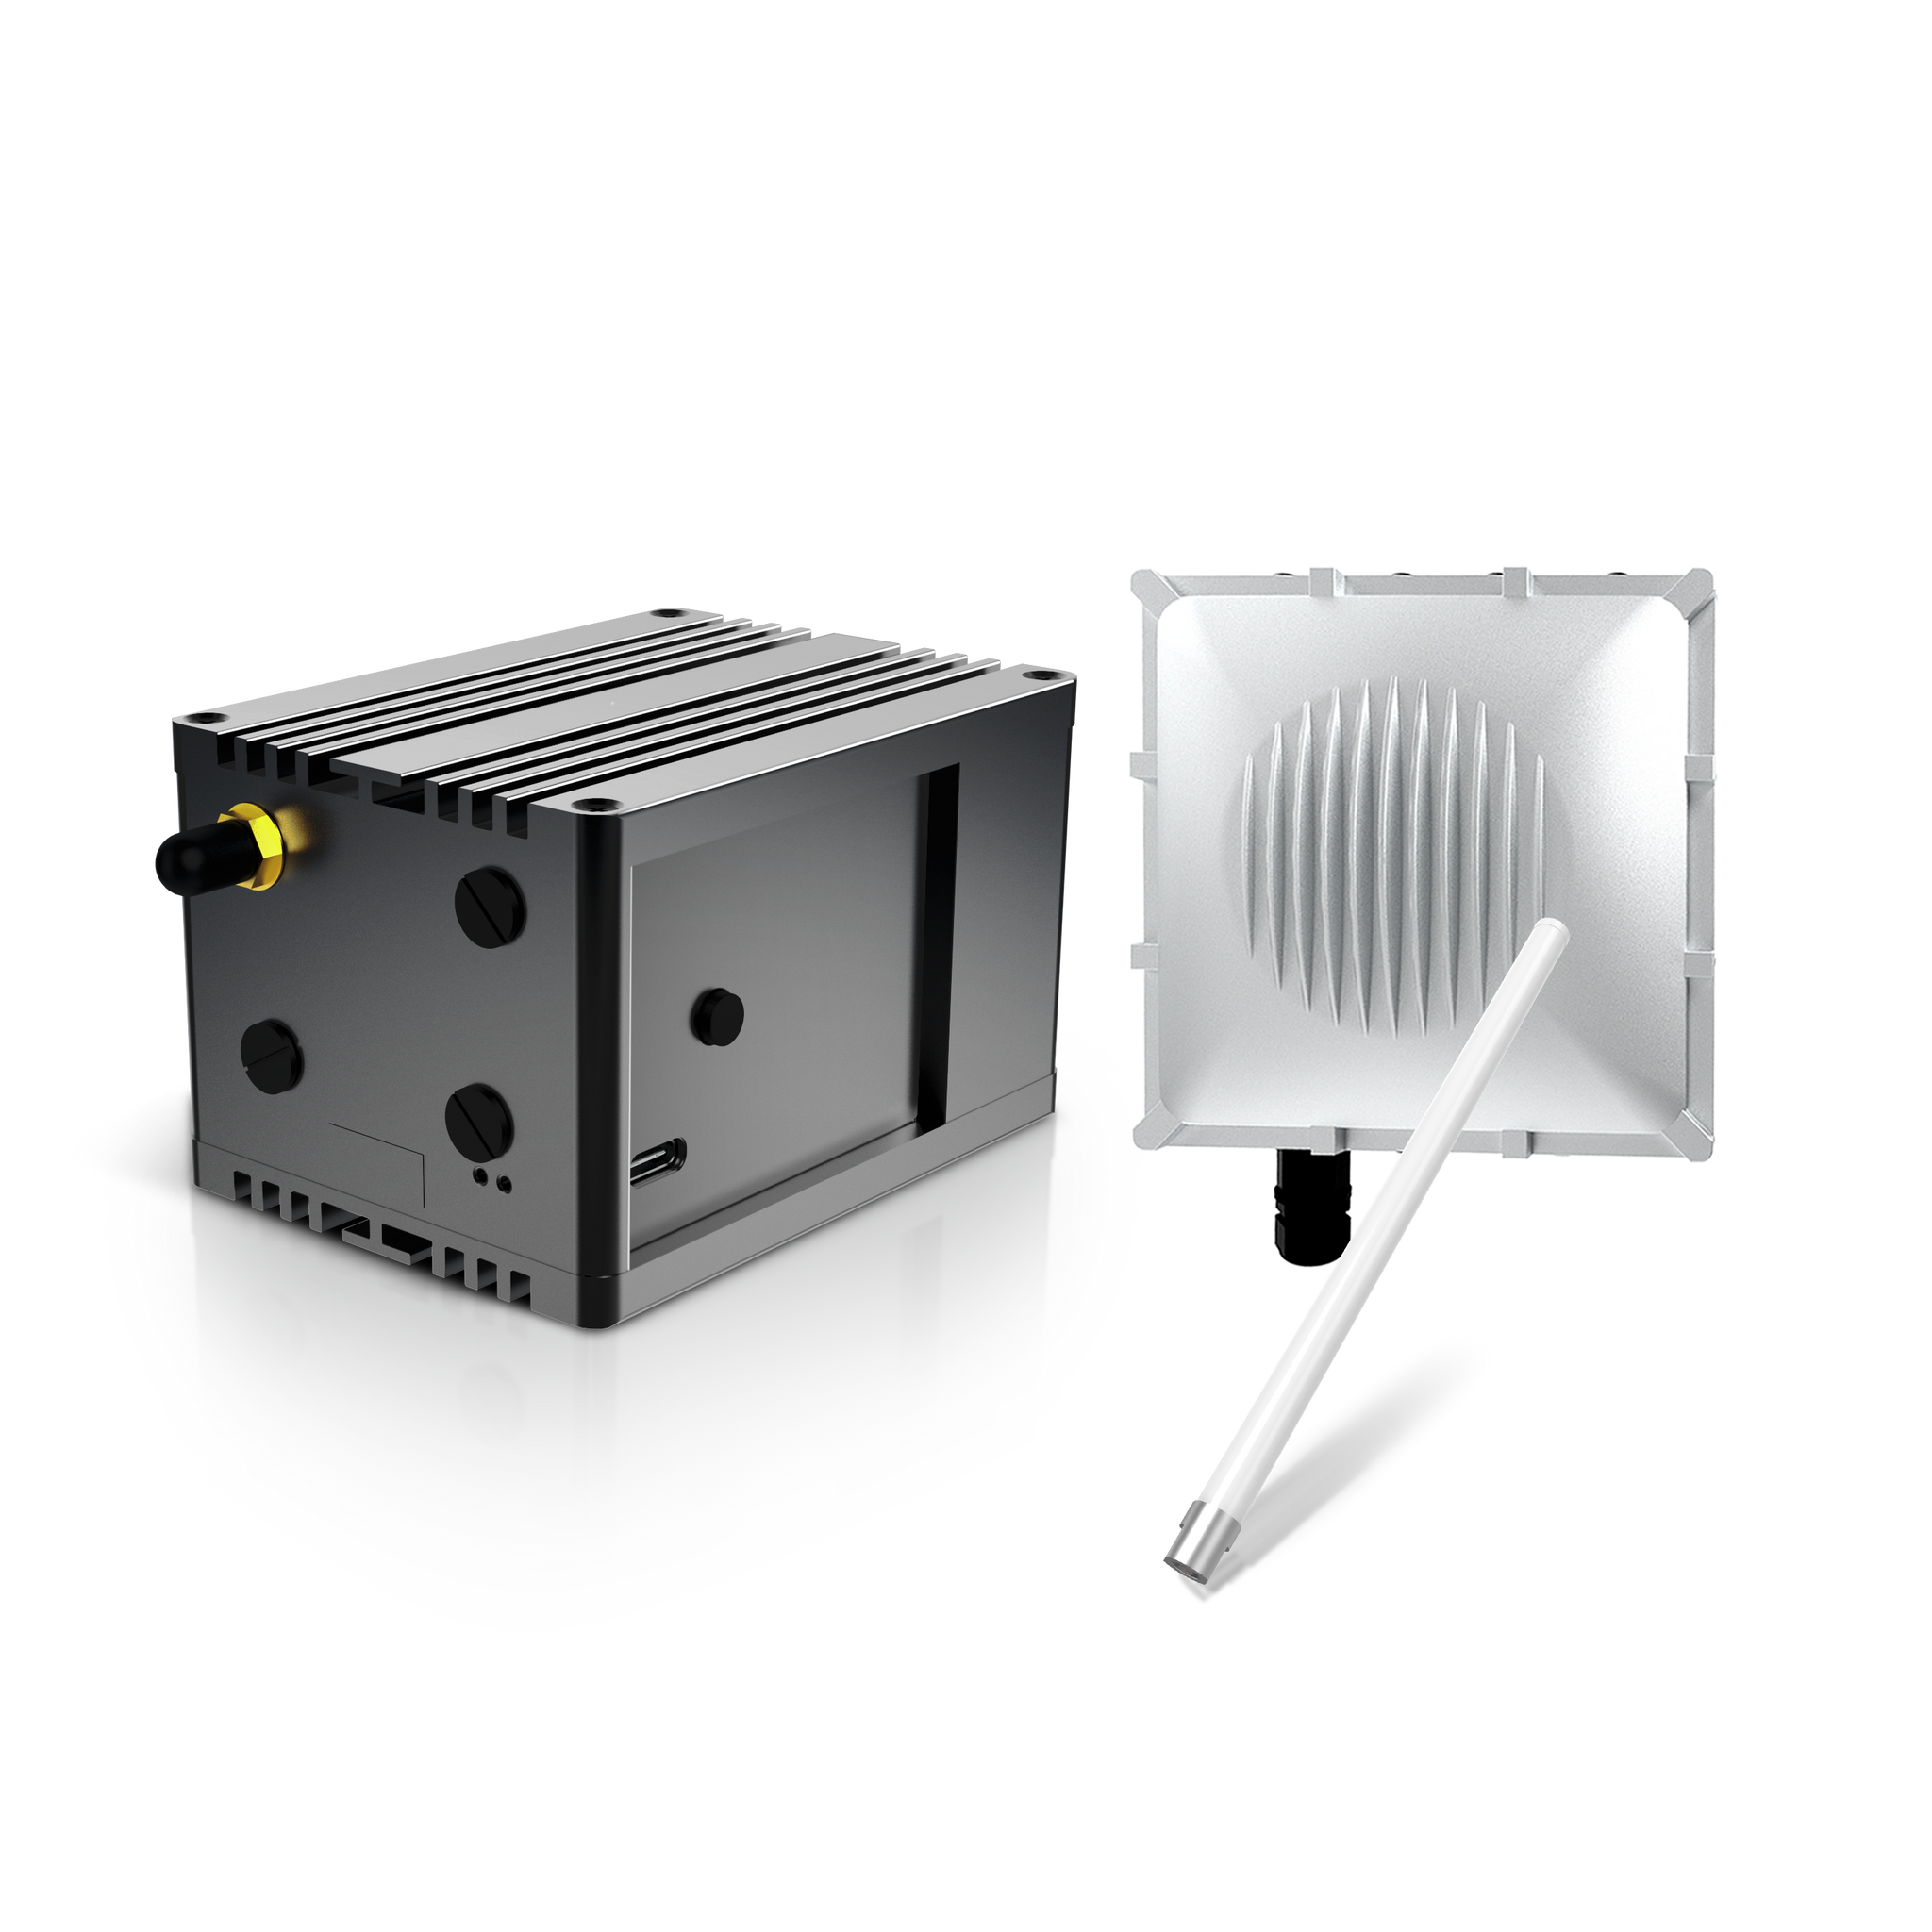 RAK Hotspot V2 Outdoor Bundle | Complete Bundle for maximizing outdoor Helium mining efficiency with the RAK Hotspot V2